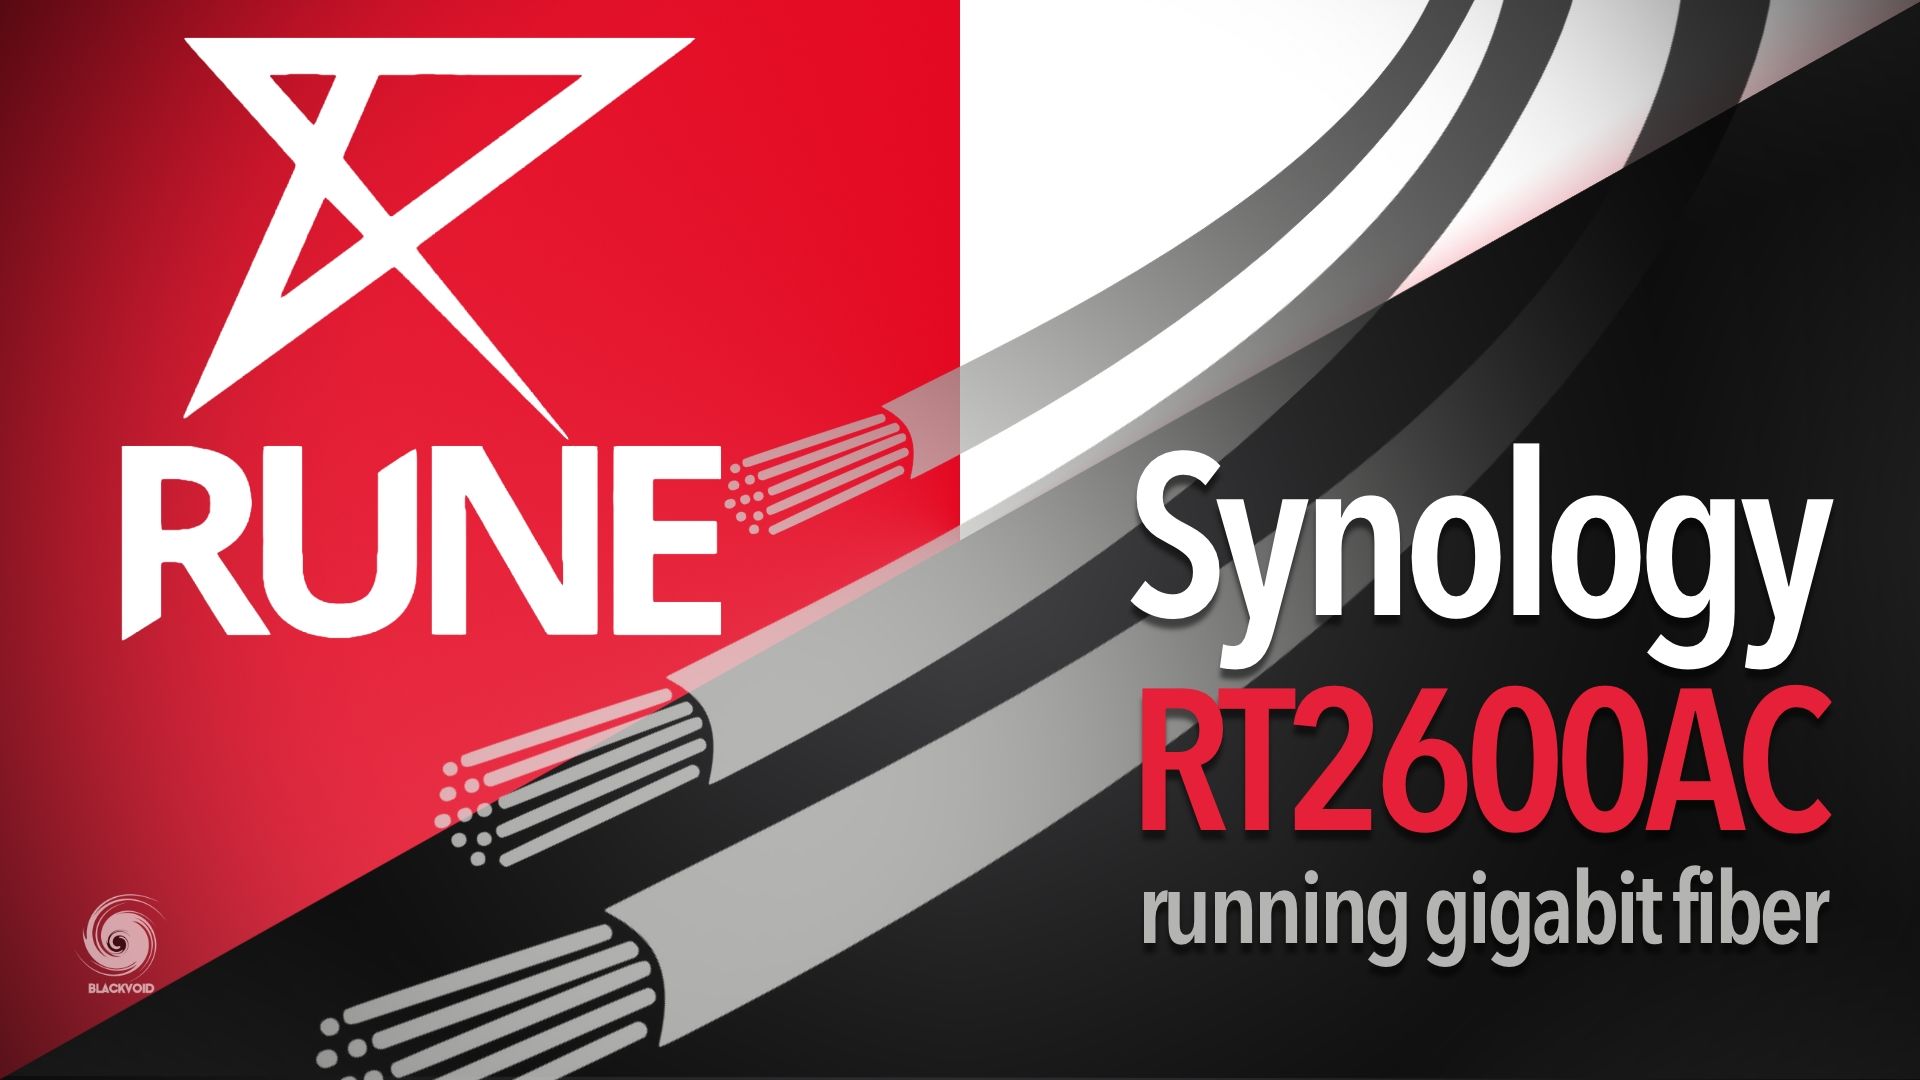 Synology RT2600AC running gigabit fiber